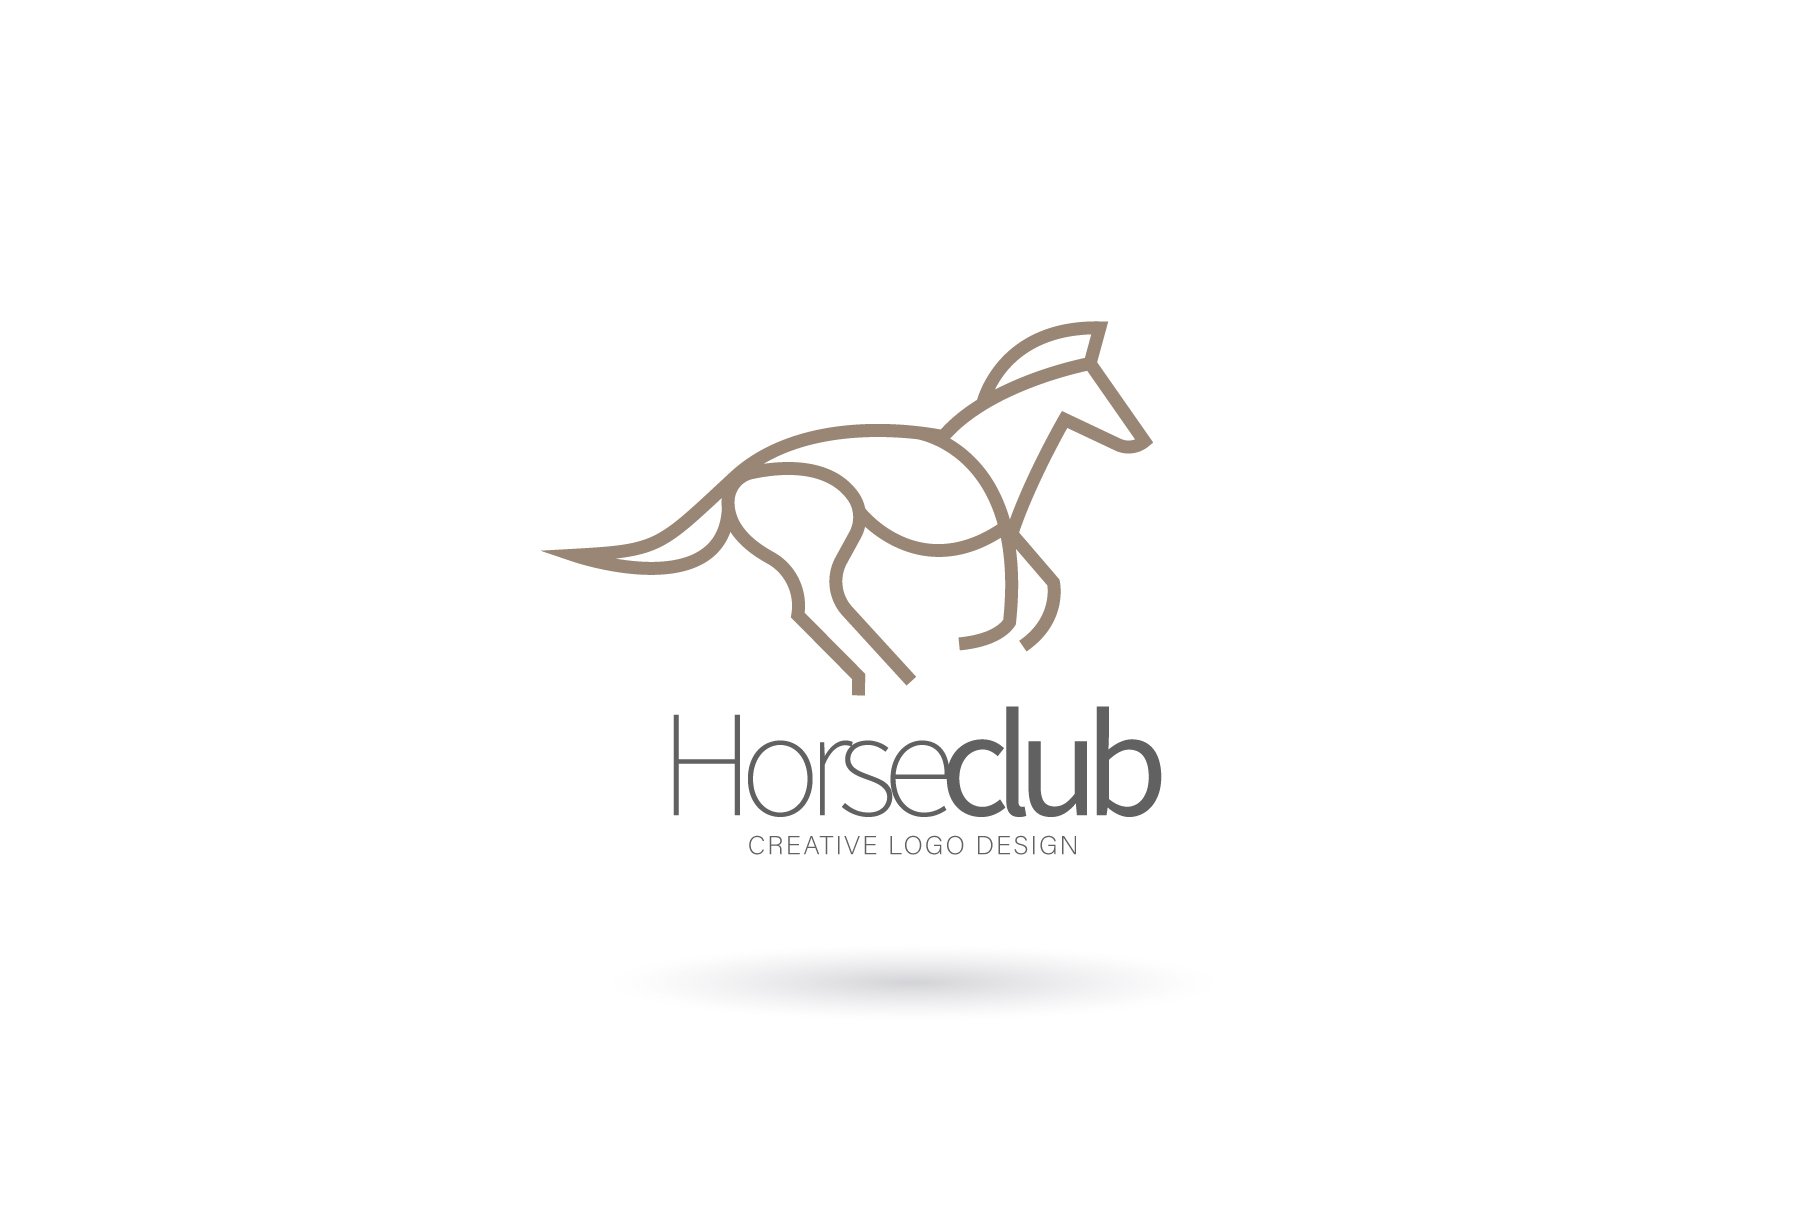 Horse club logo cover image.